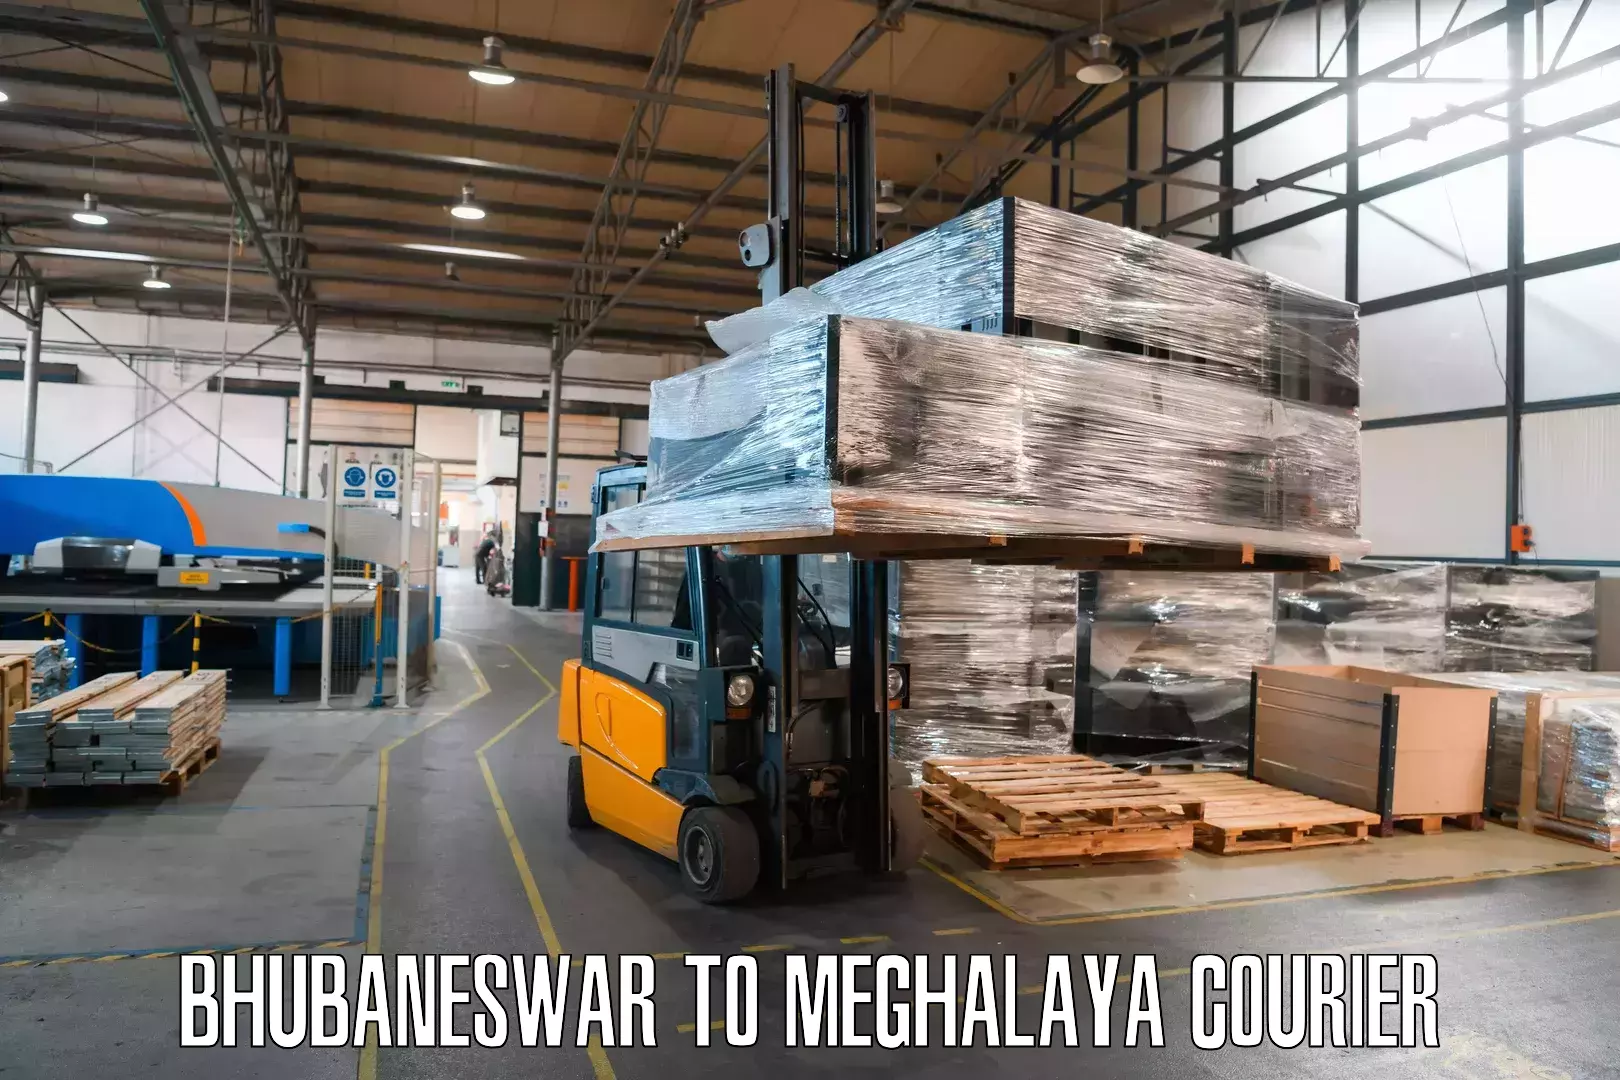 Courier service comparison Bhubaneswar to Meghalaya